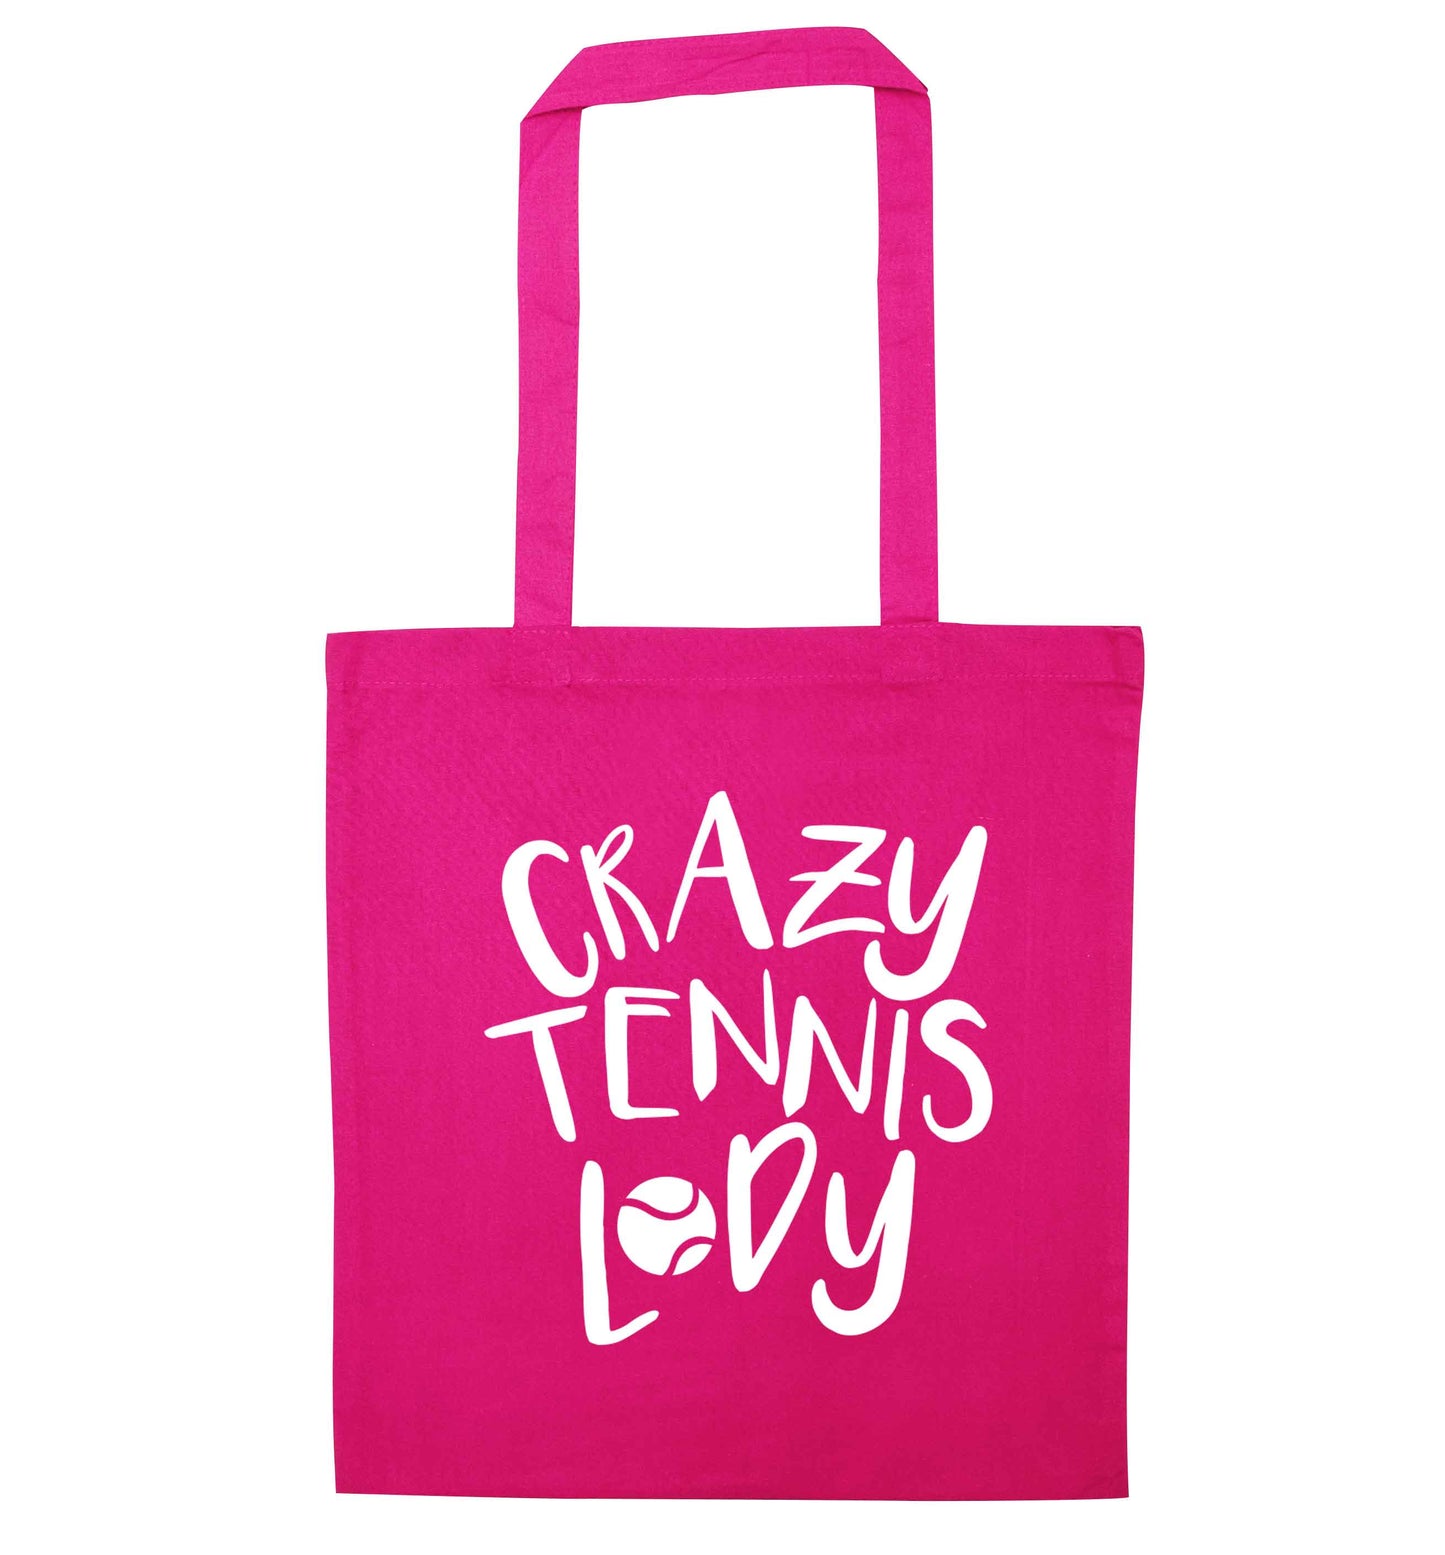 Crazy tennis lady pink tote bag